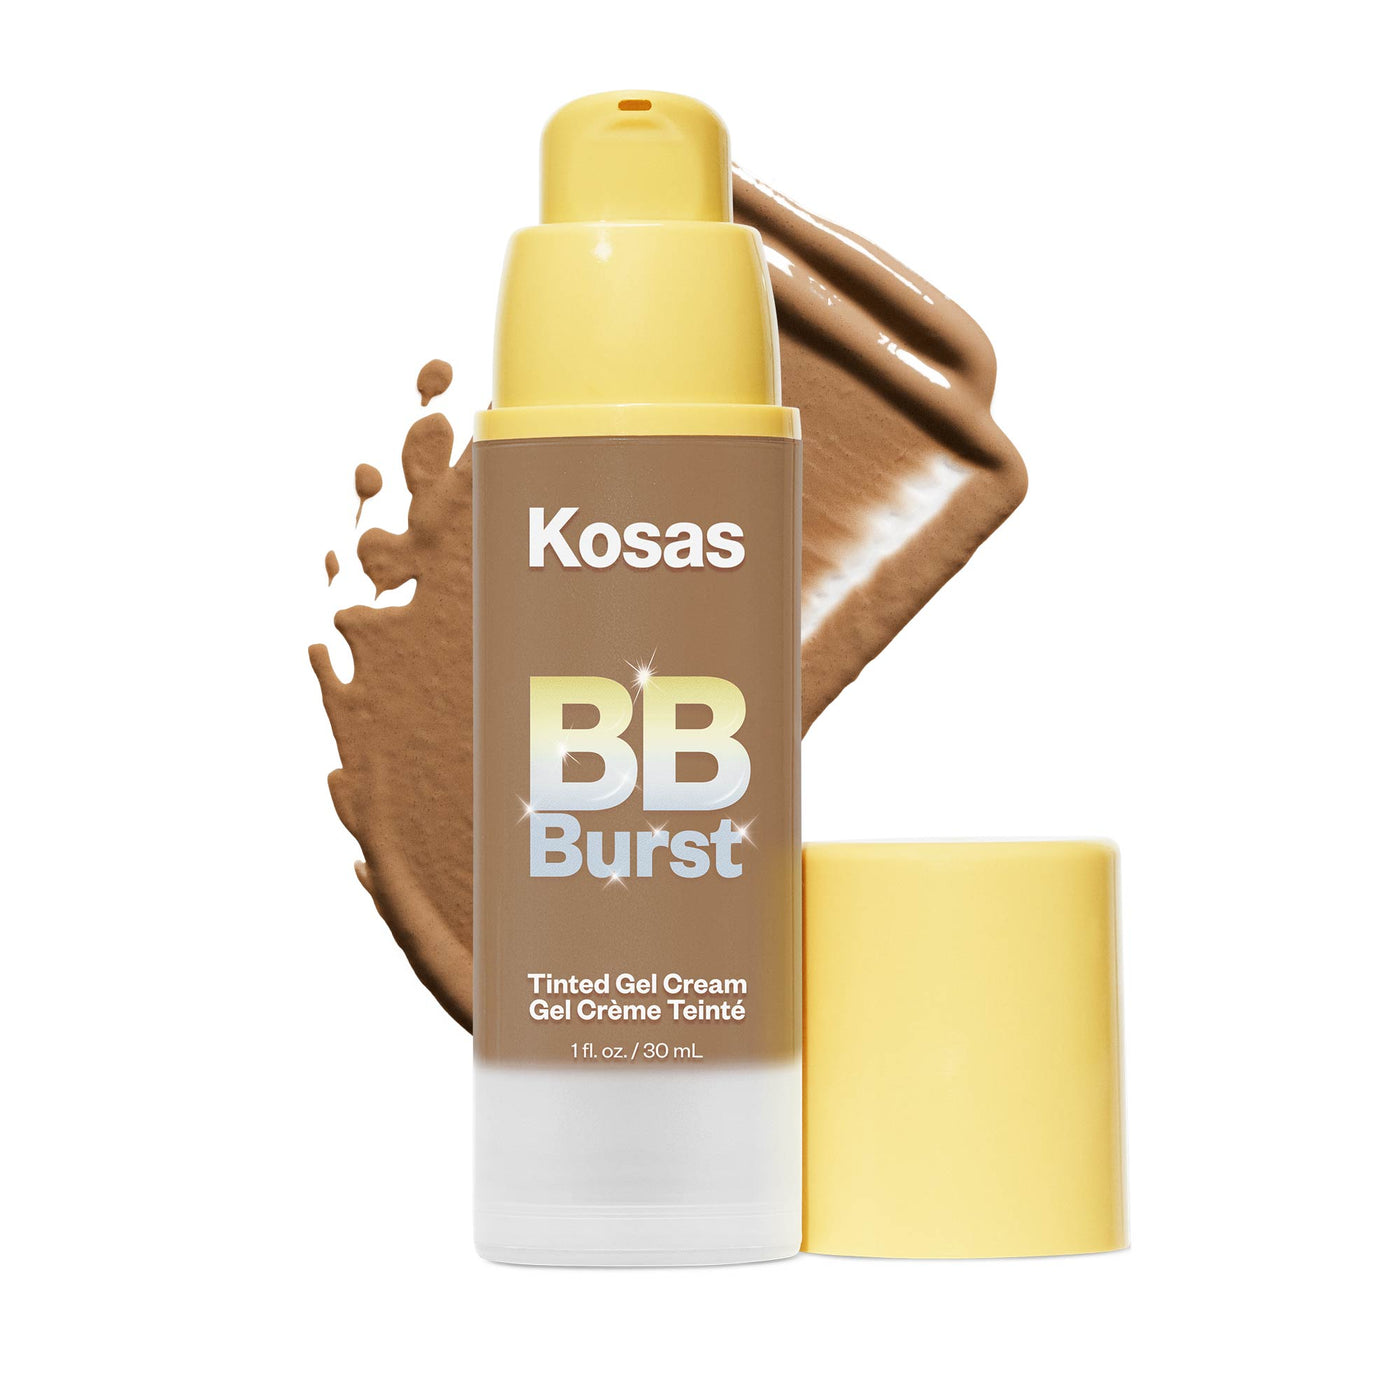 Kosas BB Burst Tinted Gel Cream 35